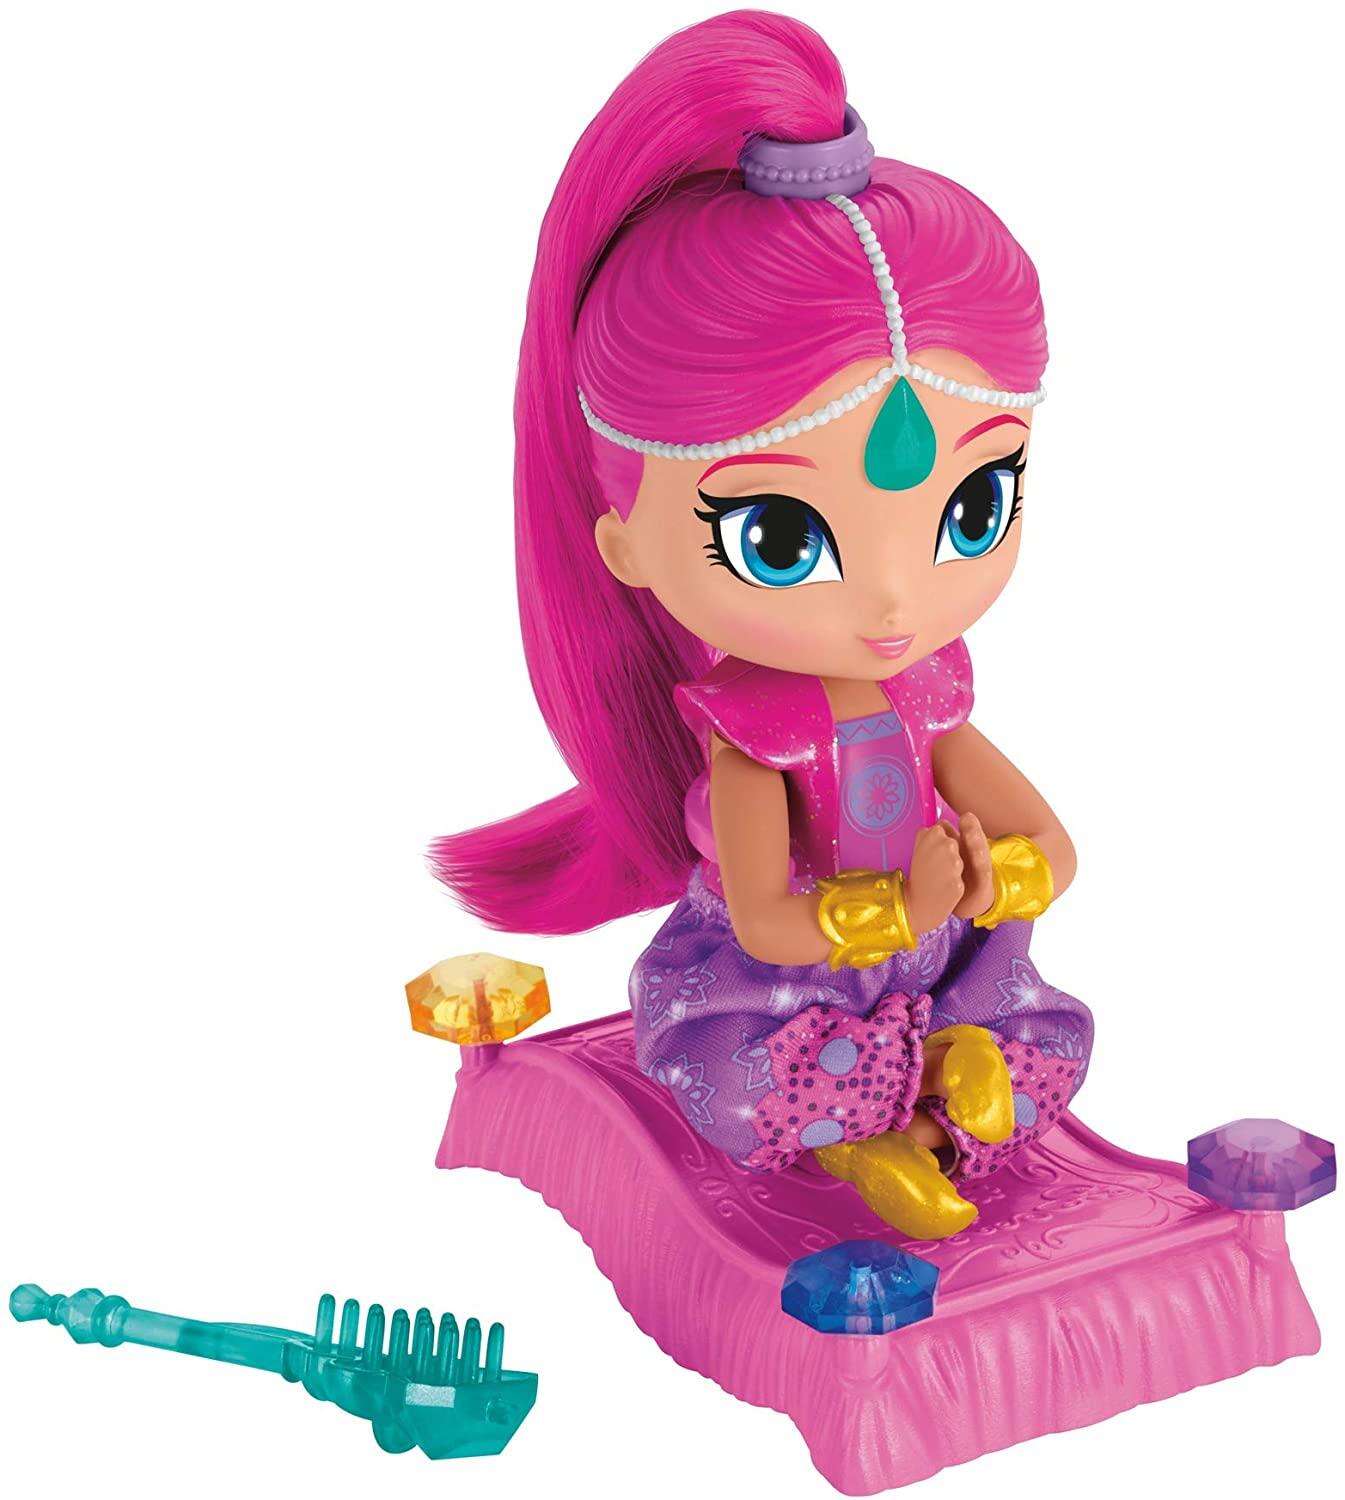 Fisher Price Nickelodeon Shimmer & Shine ตุ๊กตา​ ซิมเมอร์ แอนด์ ไซน์ ขี่พรมวิเศษ Floating Genie Doll ของแท้